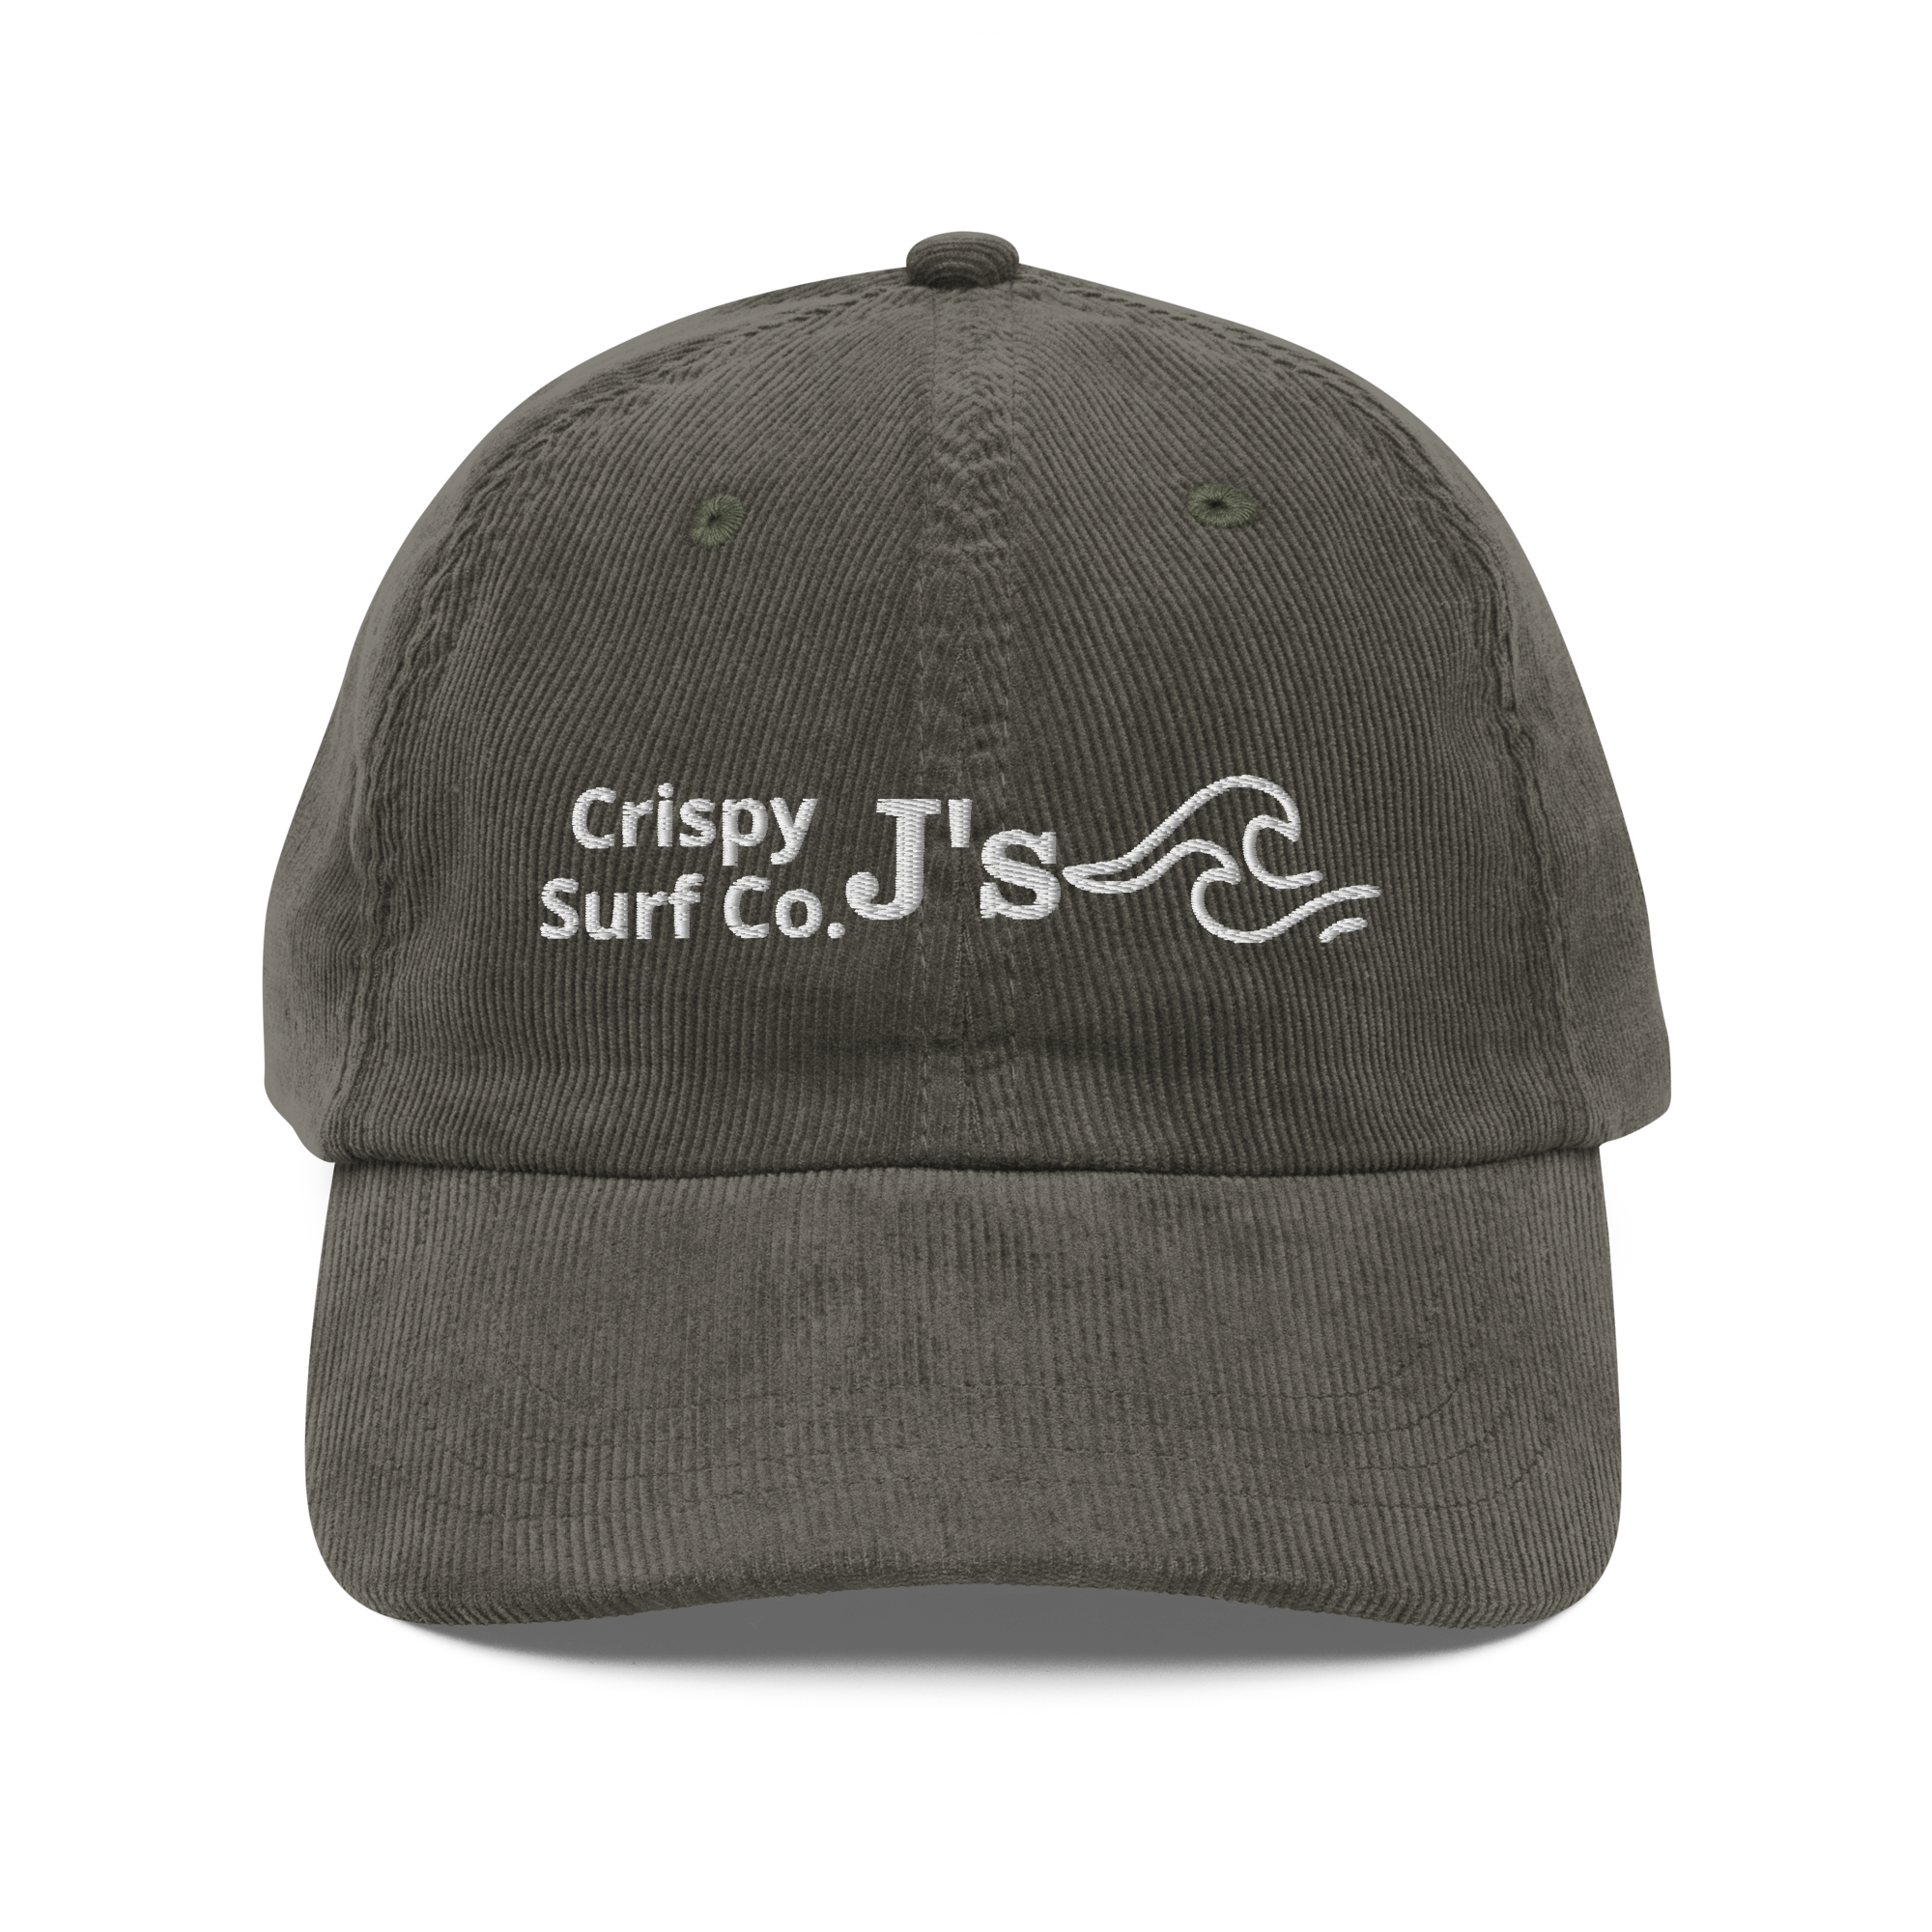 Gorra de pana Crispy J's Surf Co.